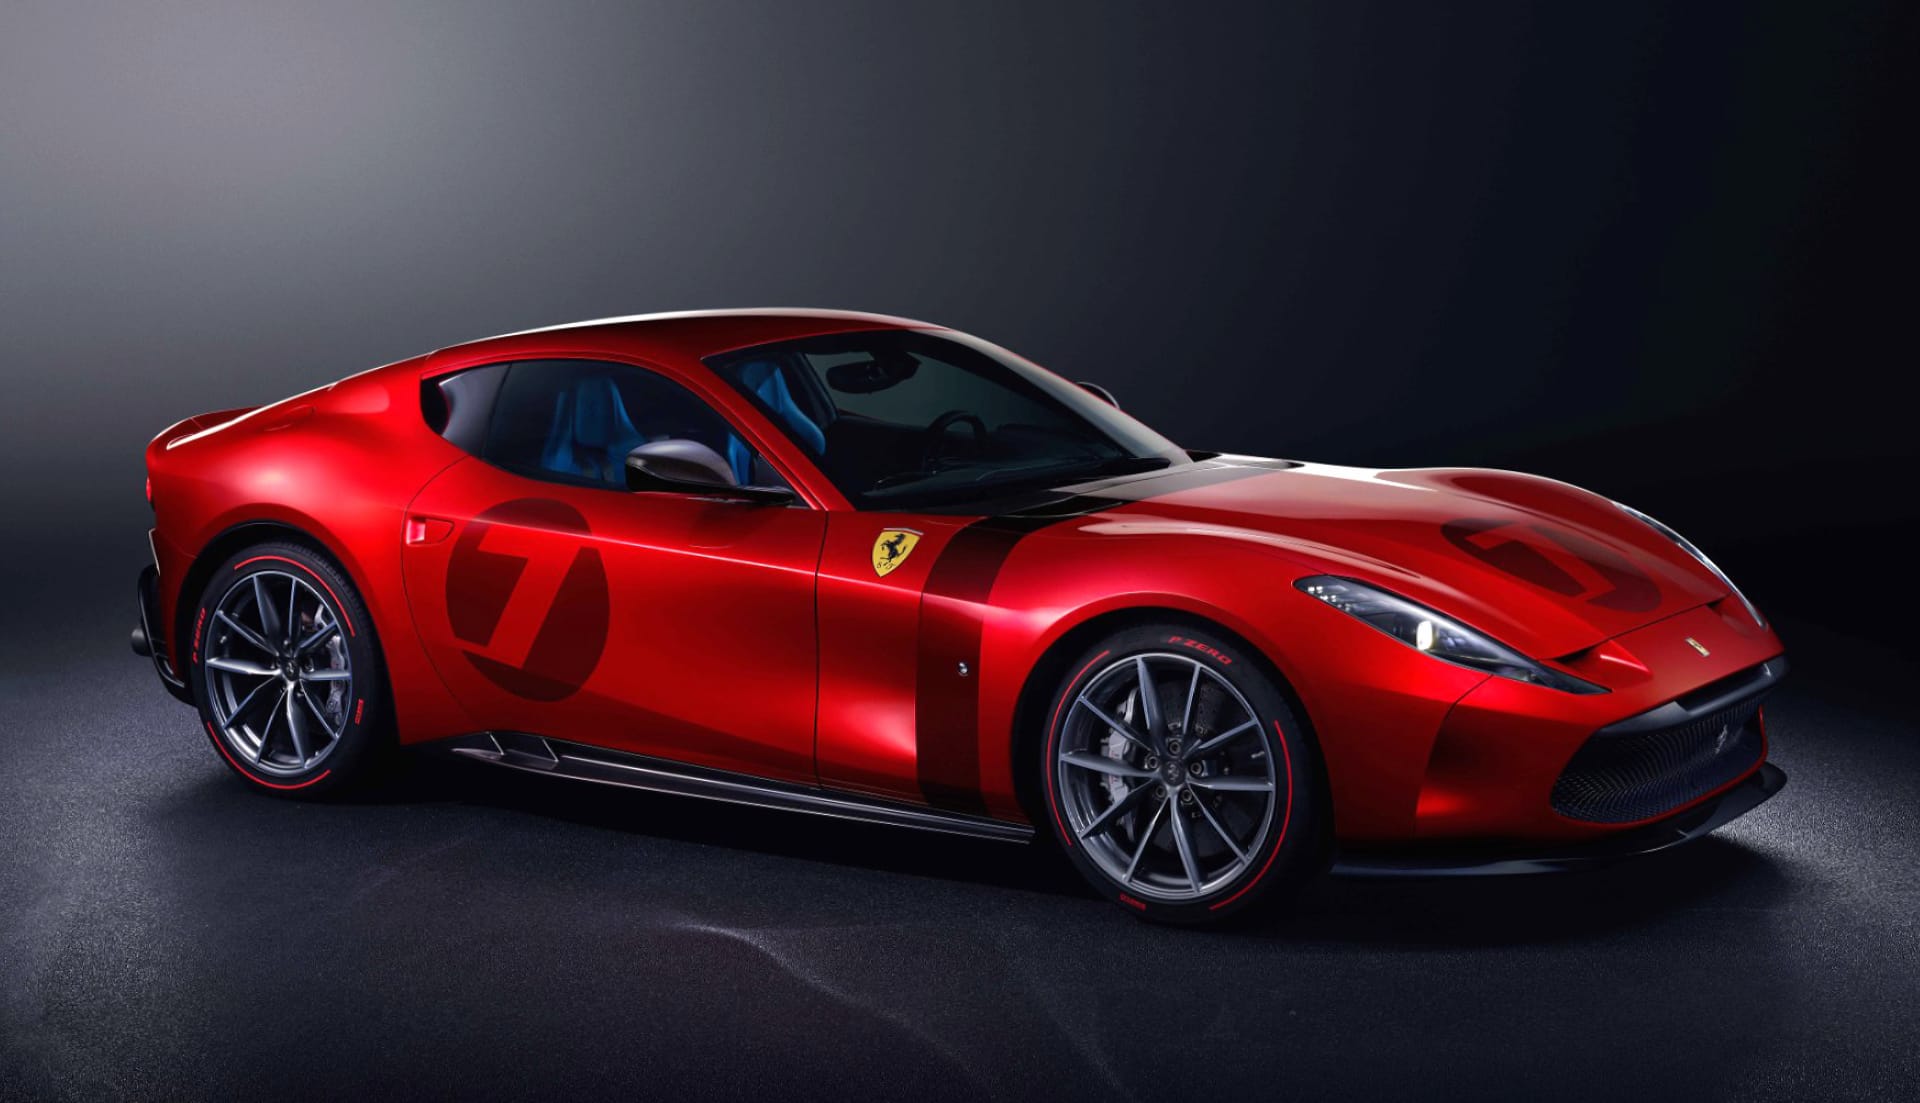 Ferrari Omologata at 1280 x 960 size wallpapers HD quality